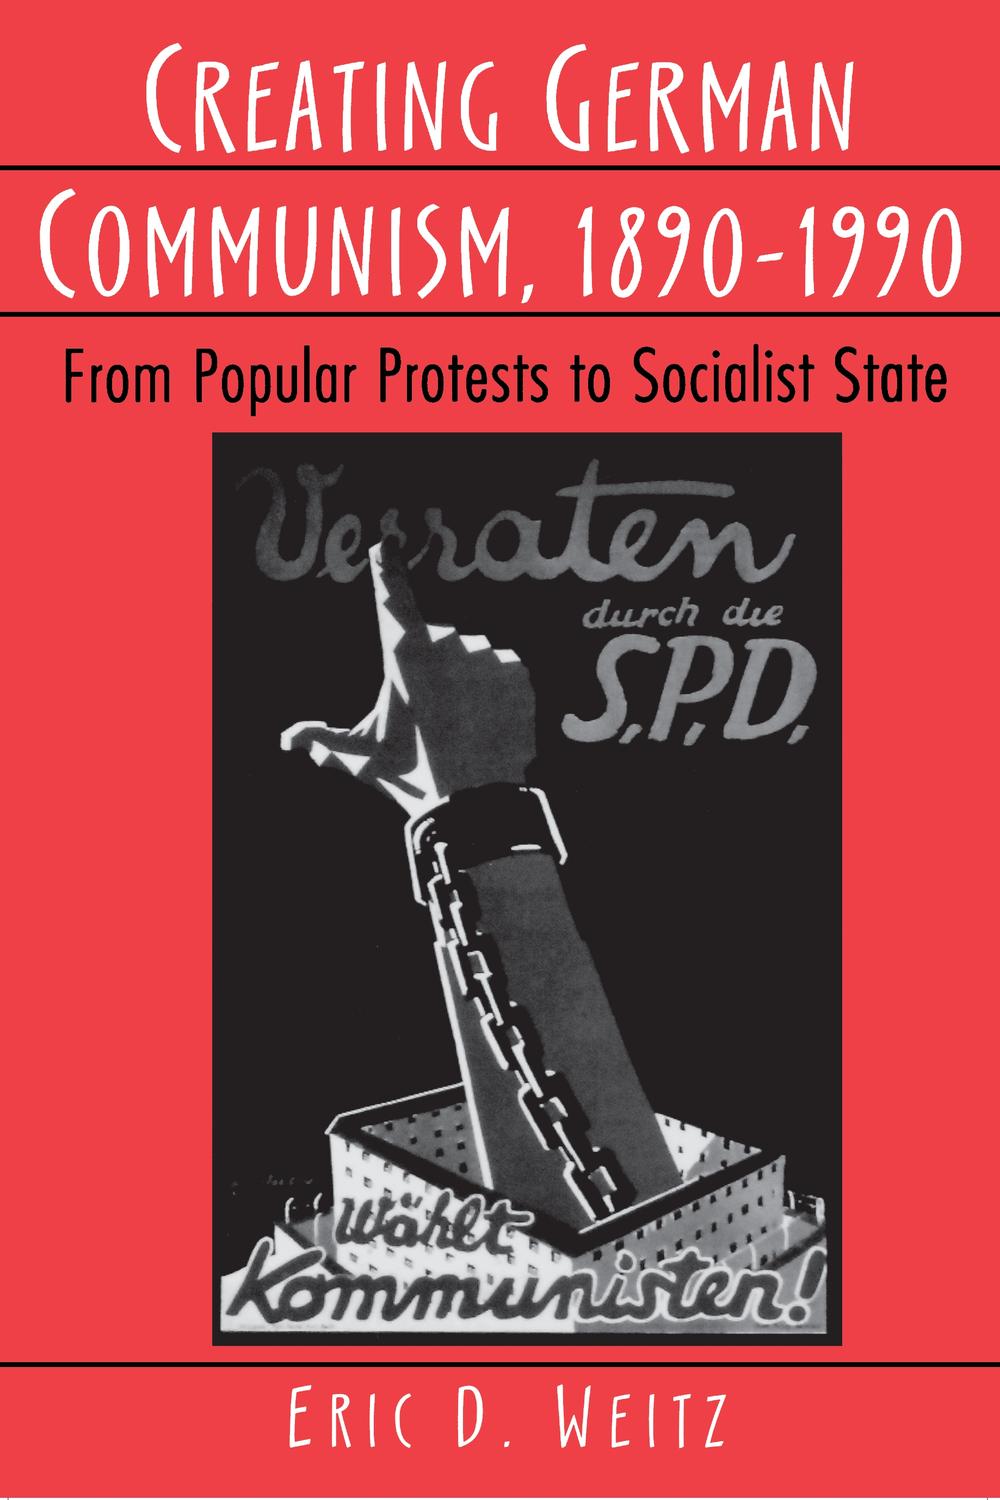 Creating German Communism, 1890-1990 - Eric D. Weitz